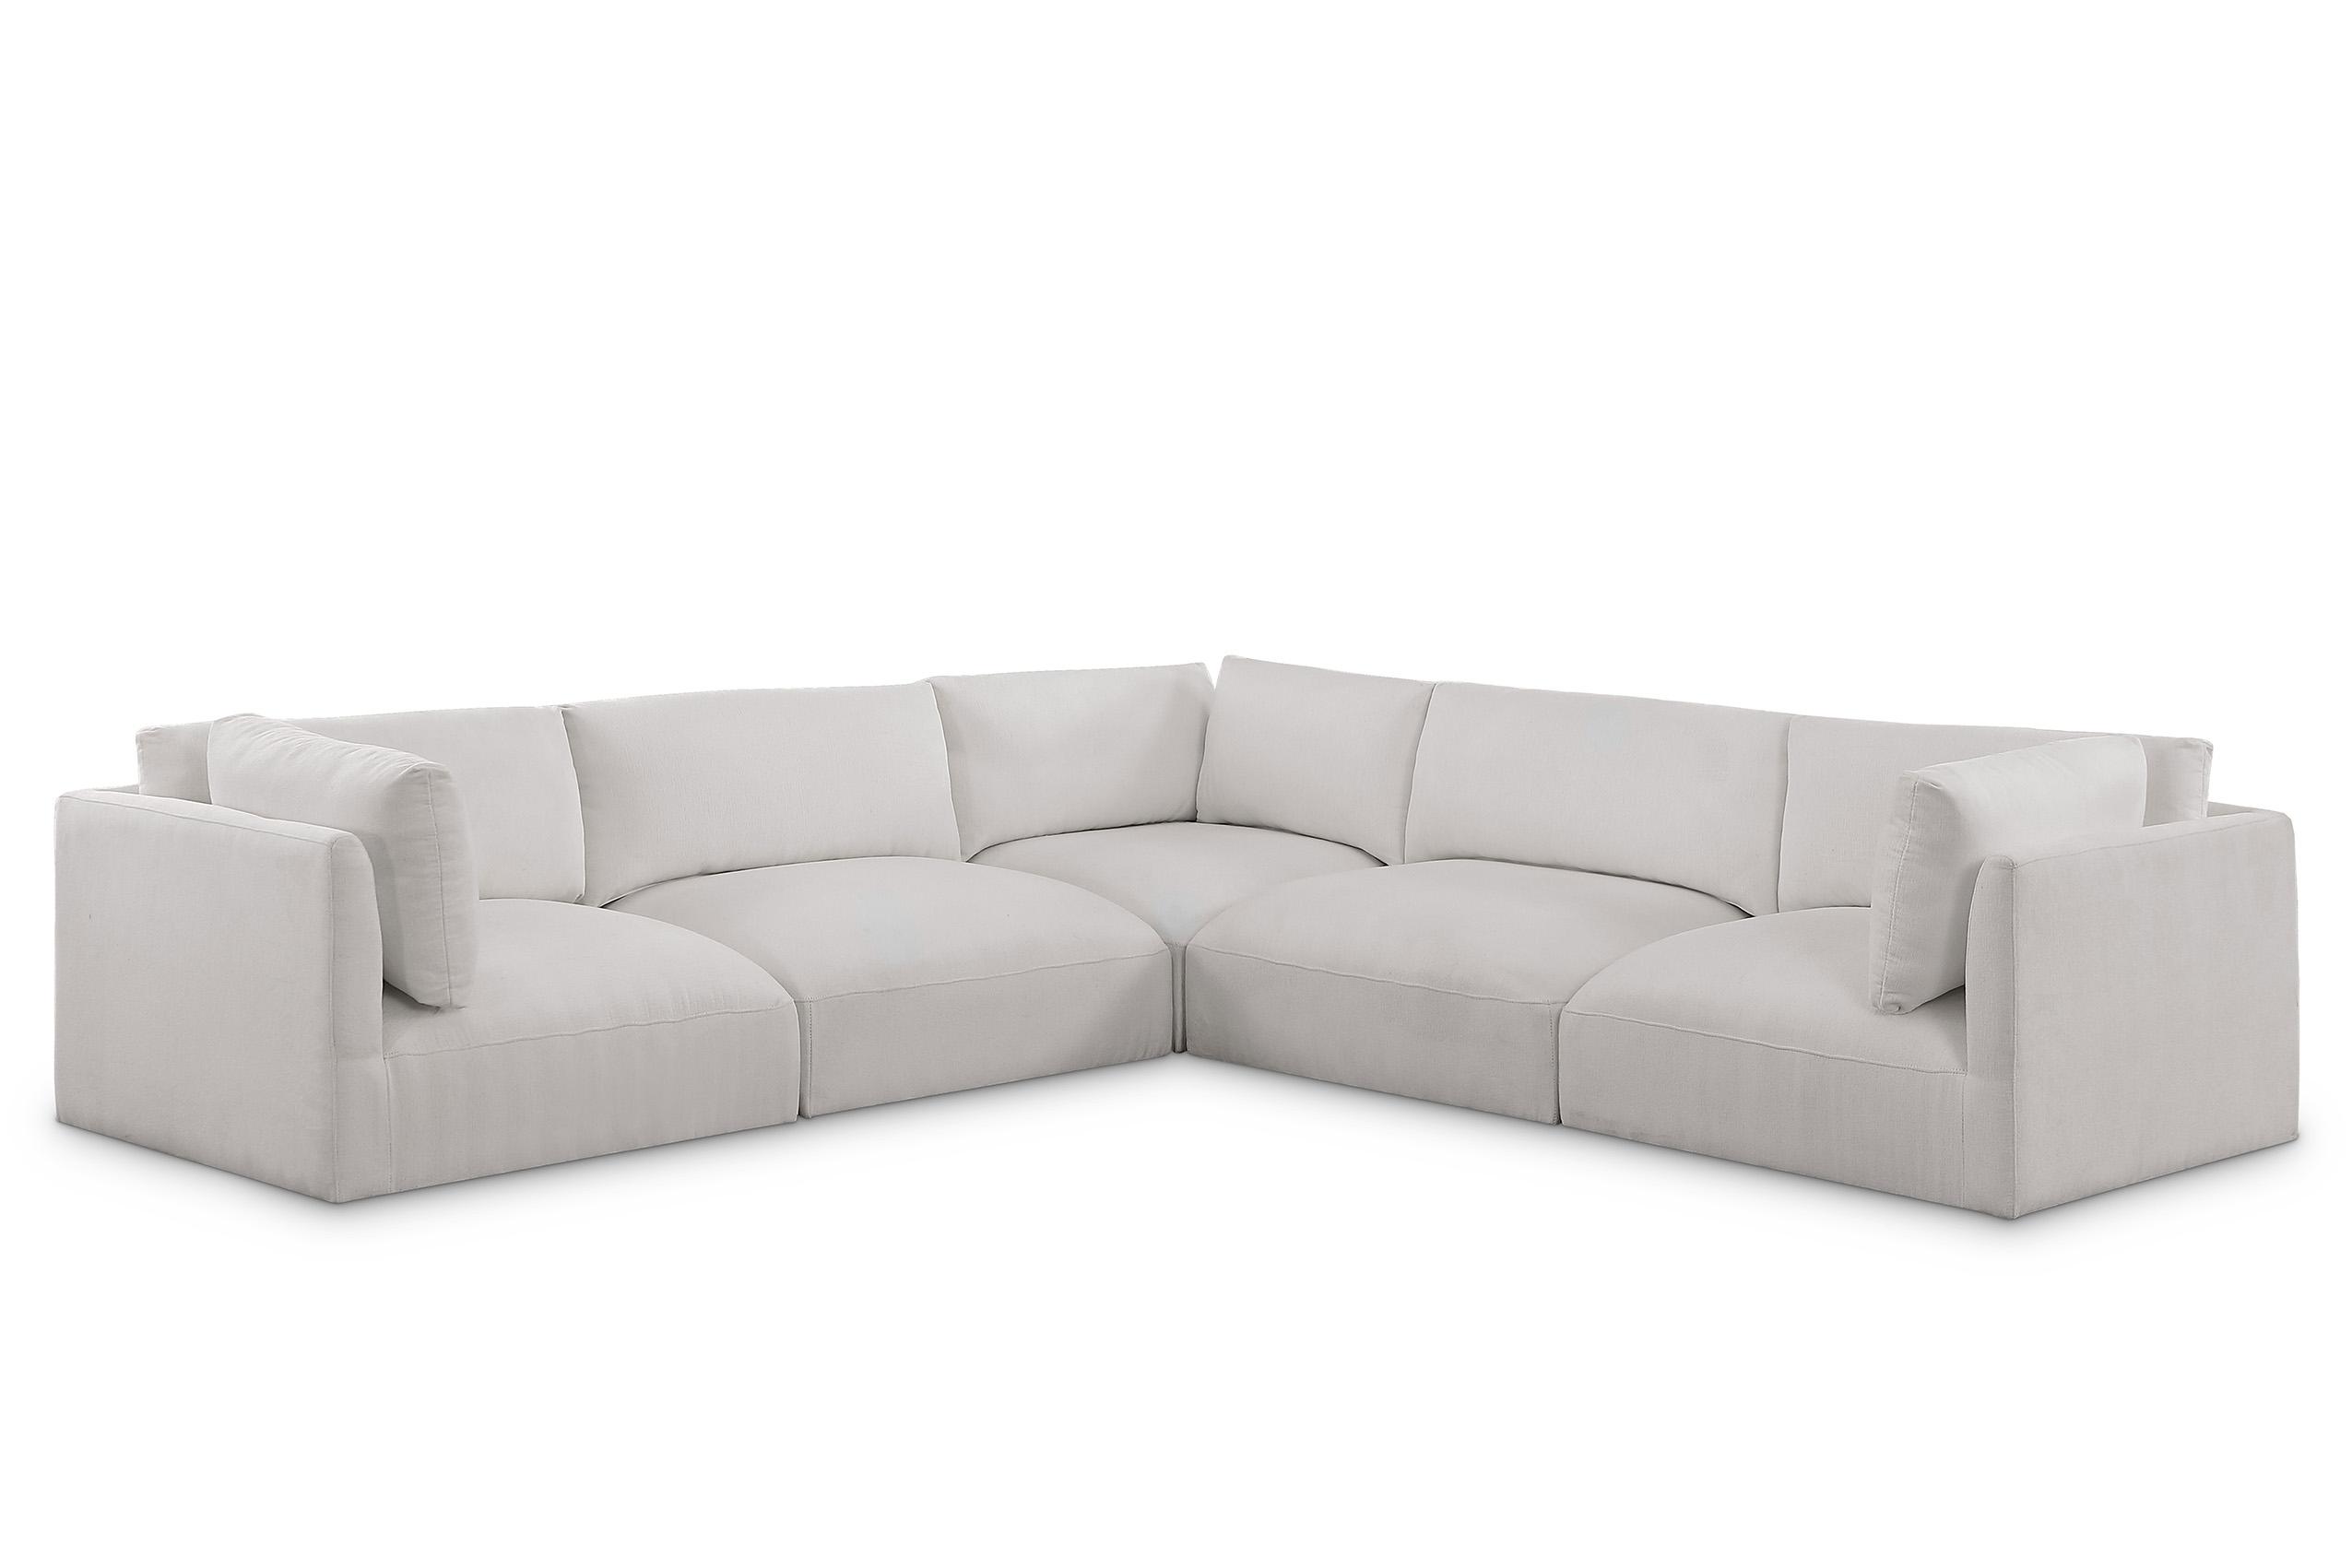 Contemporary, Modern Modular Sectional Sofa EASE 696Cream-Sec5D 696Cream-Sec5D in Cream Fabric